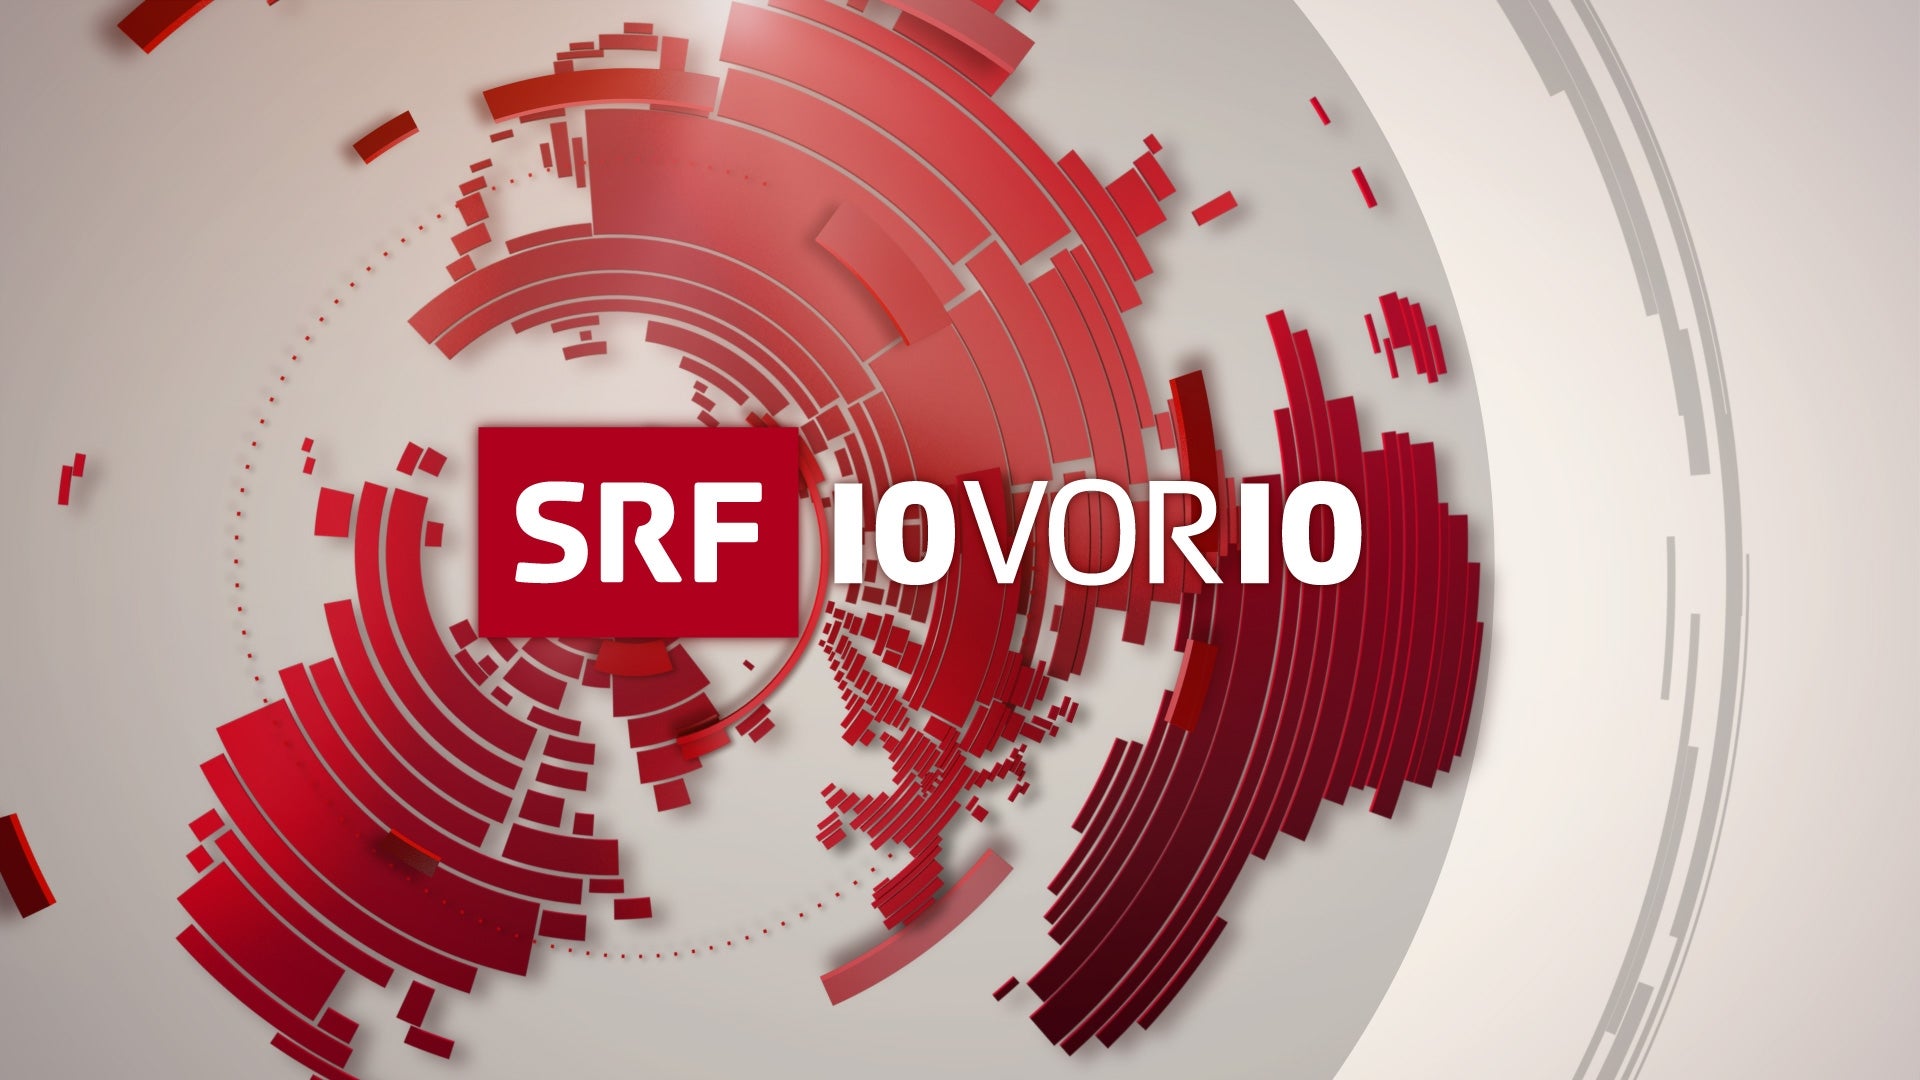 TV ratings for 10vor10 in Japan. SRF 1 TV series